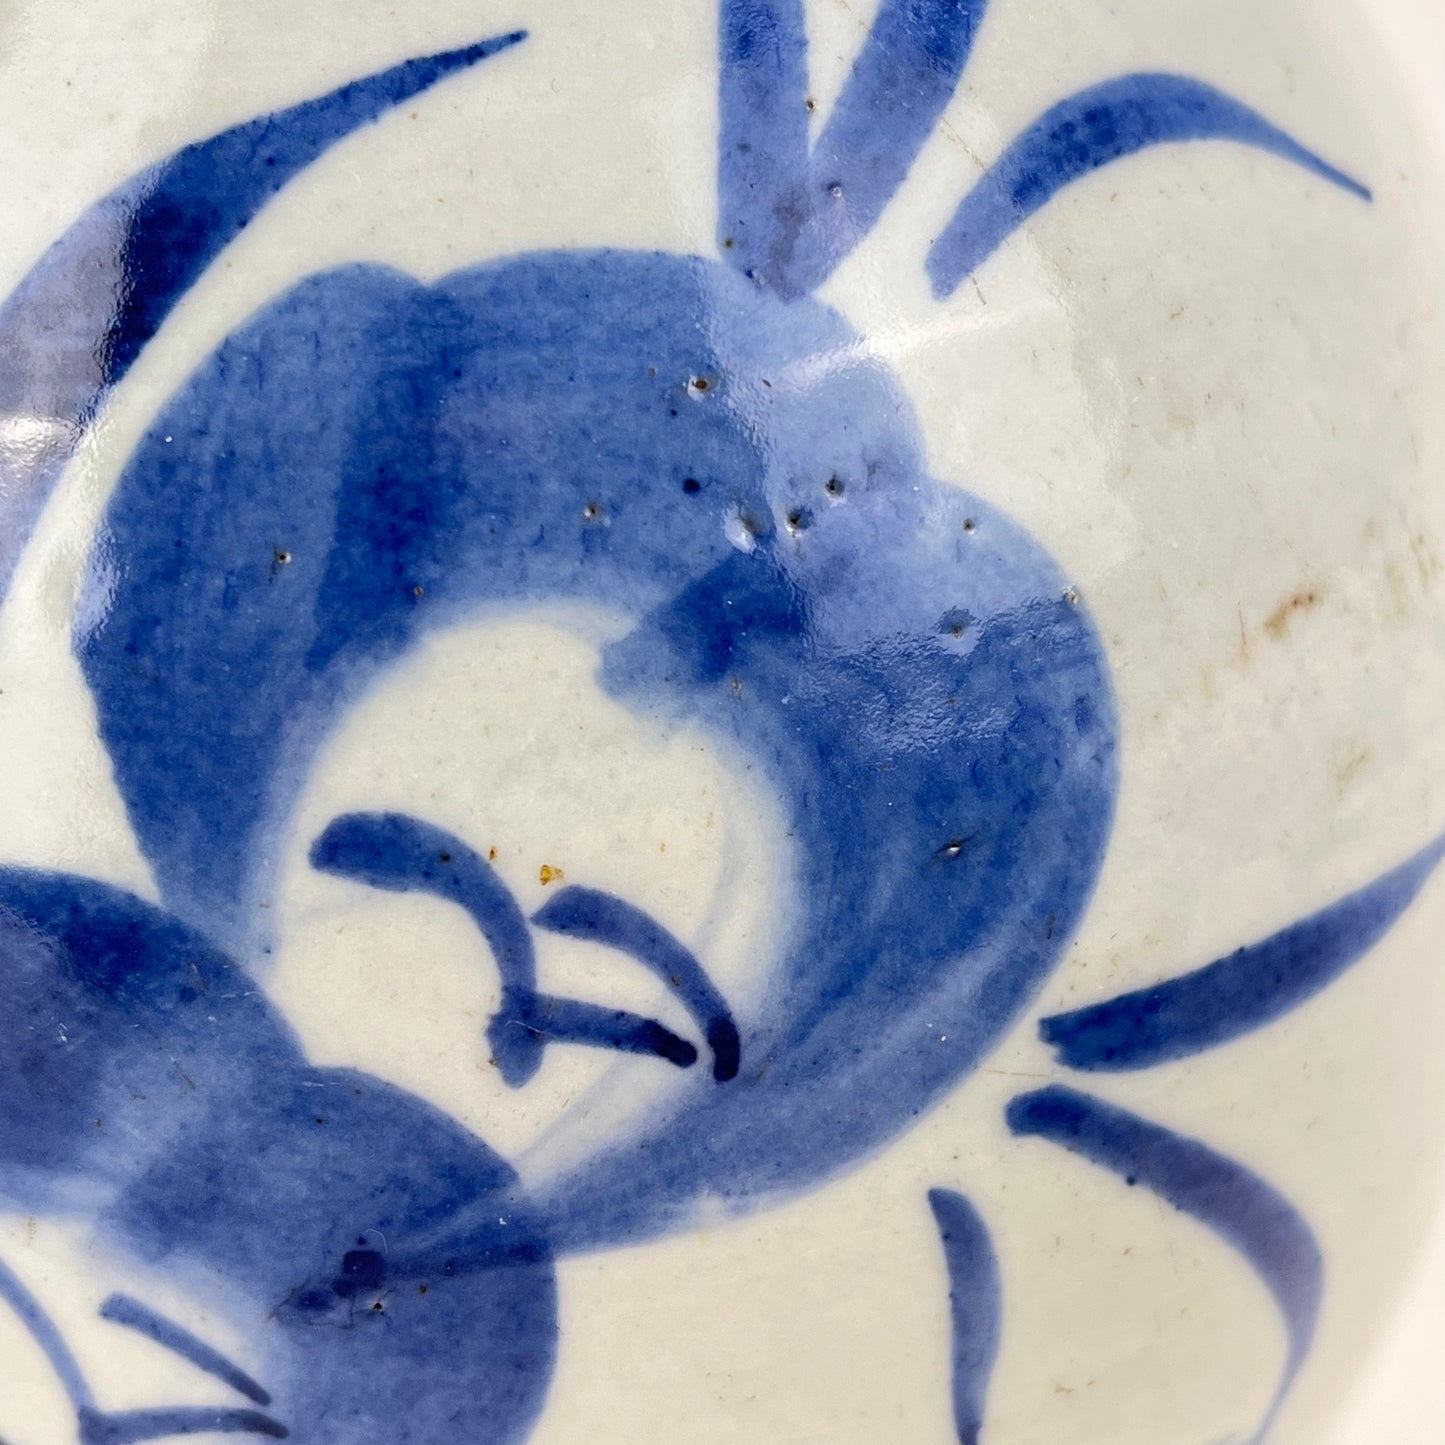 Antique Japanese c1890 Tokkuri Sake Bottle Vase Blue & White 9.0